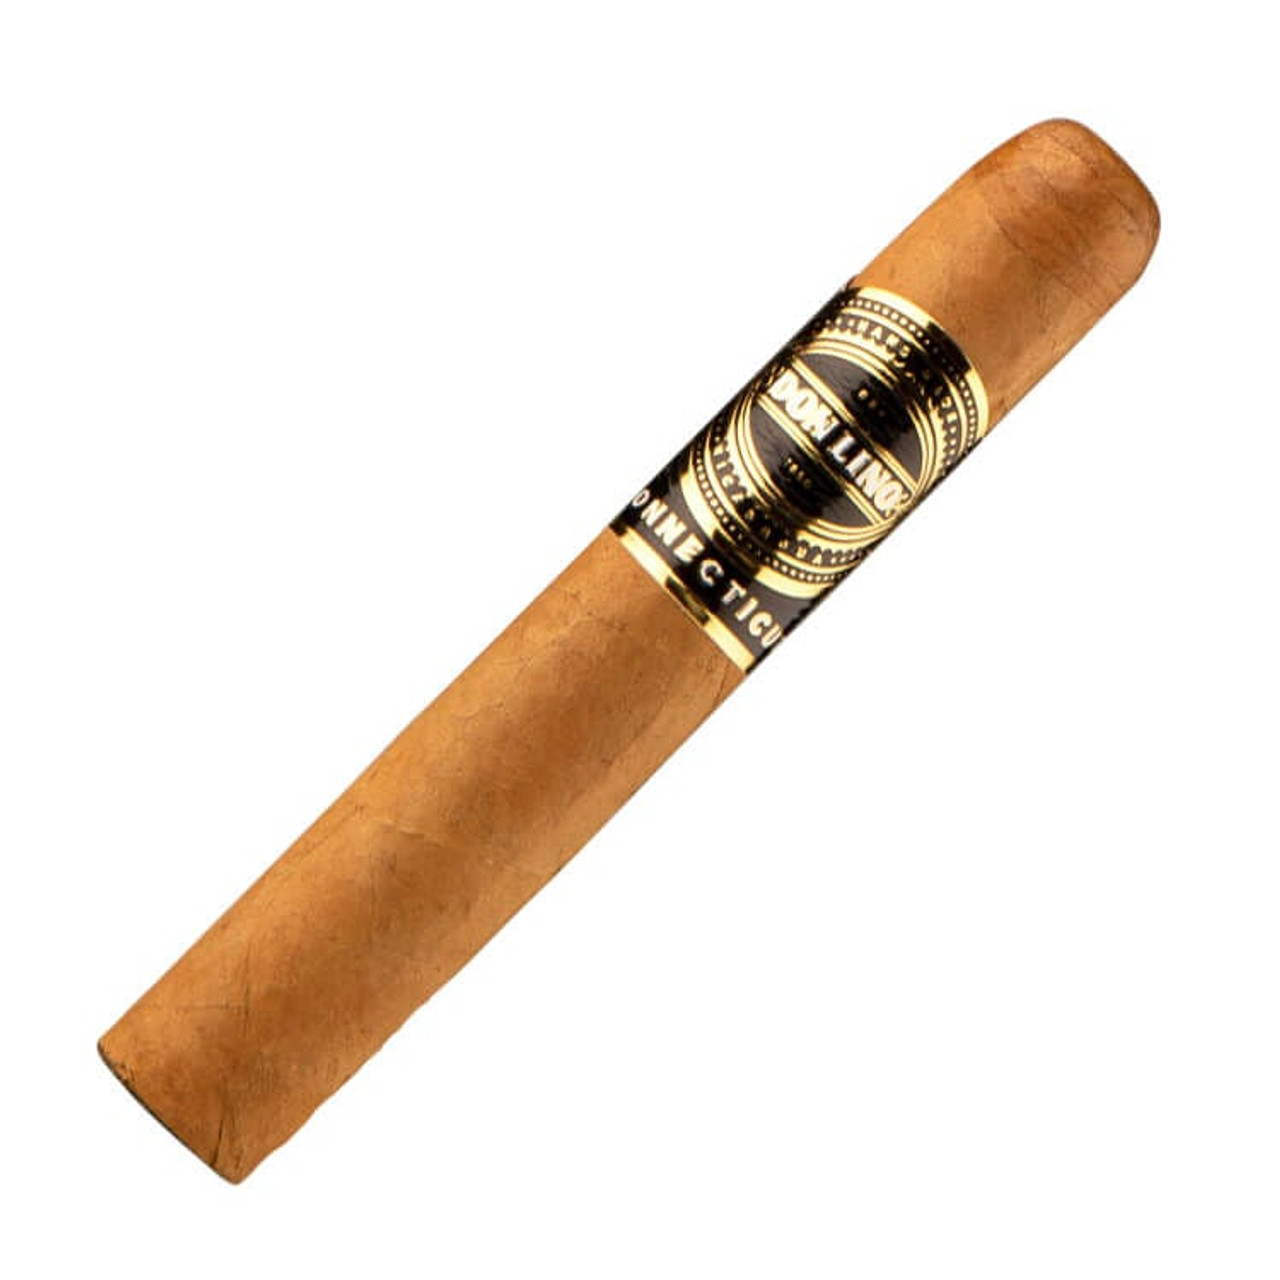 Don Lino Connecticut Robusto Cigars - 5 x 50 Single